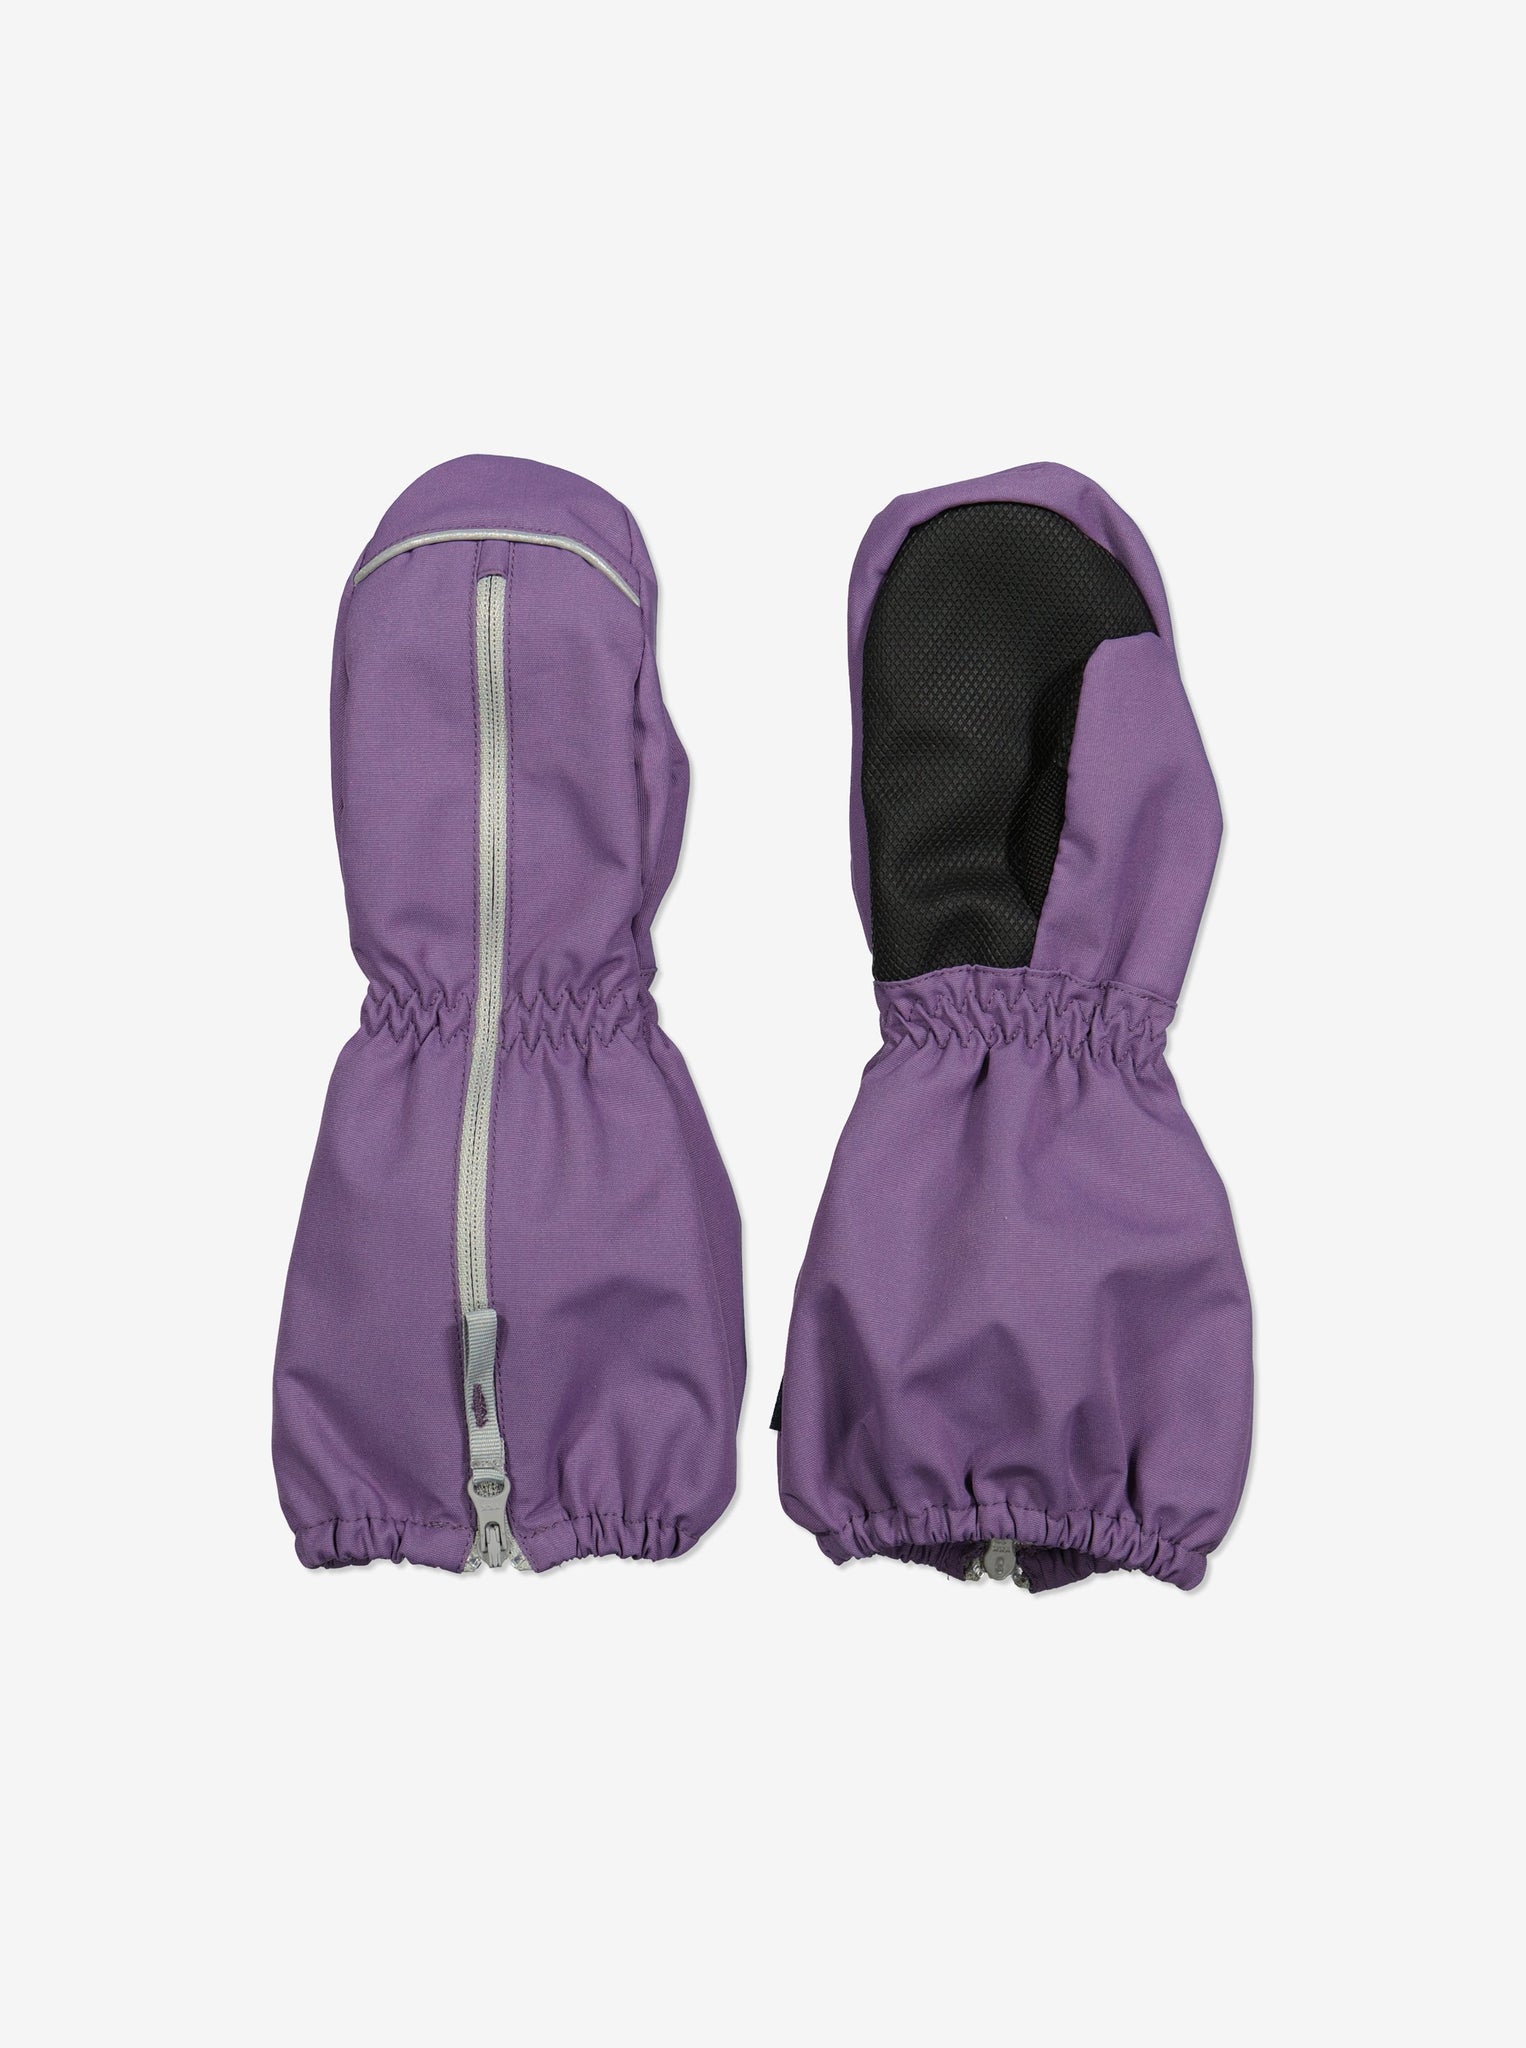 Purple Kids Waterproof Mittens from Polarn O. Pyret Kidswear. Warm kids Mittens 